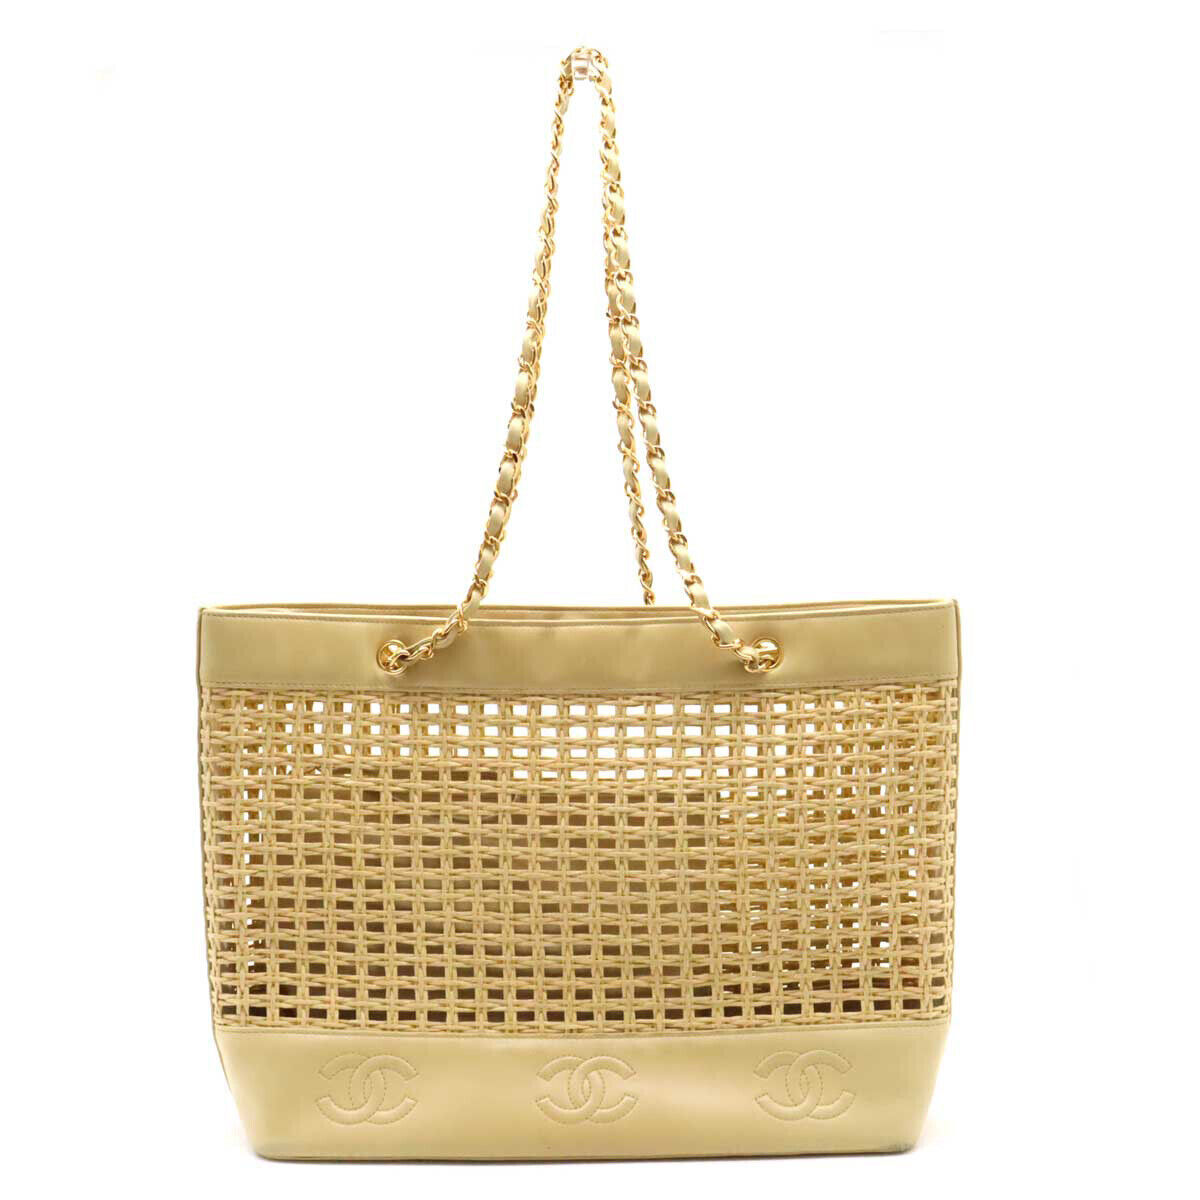 Chanel Tote Bag Shoulder Chain Basket Straw Leather Beige Natural